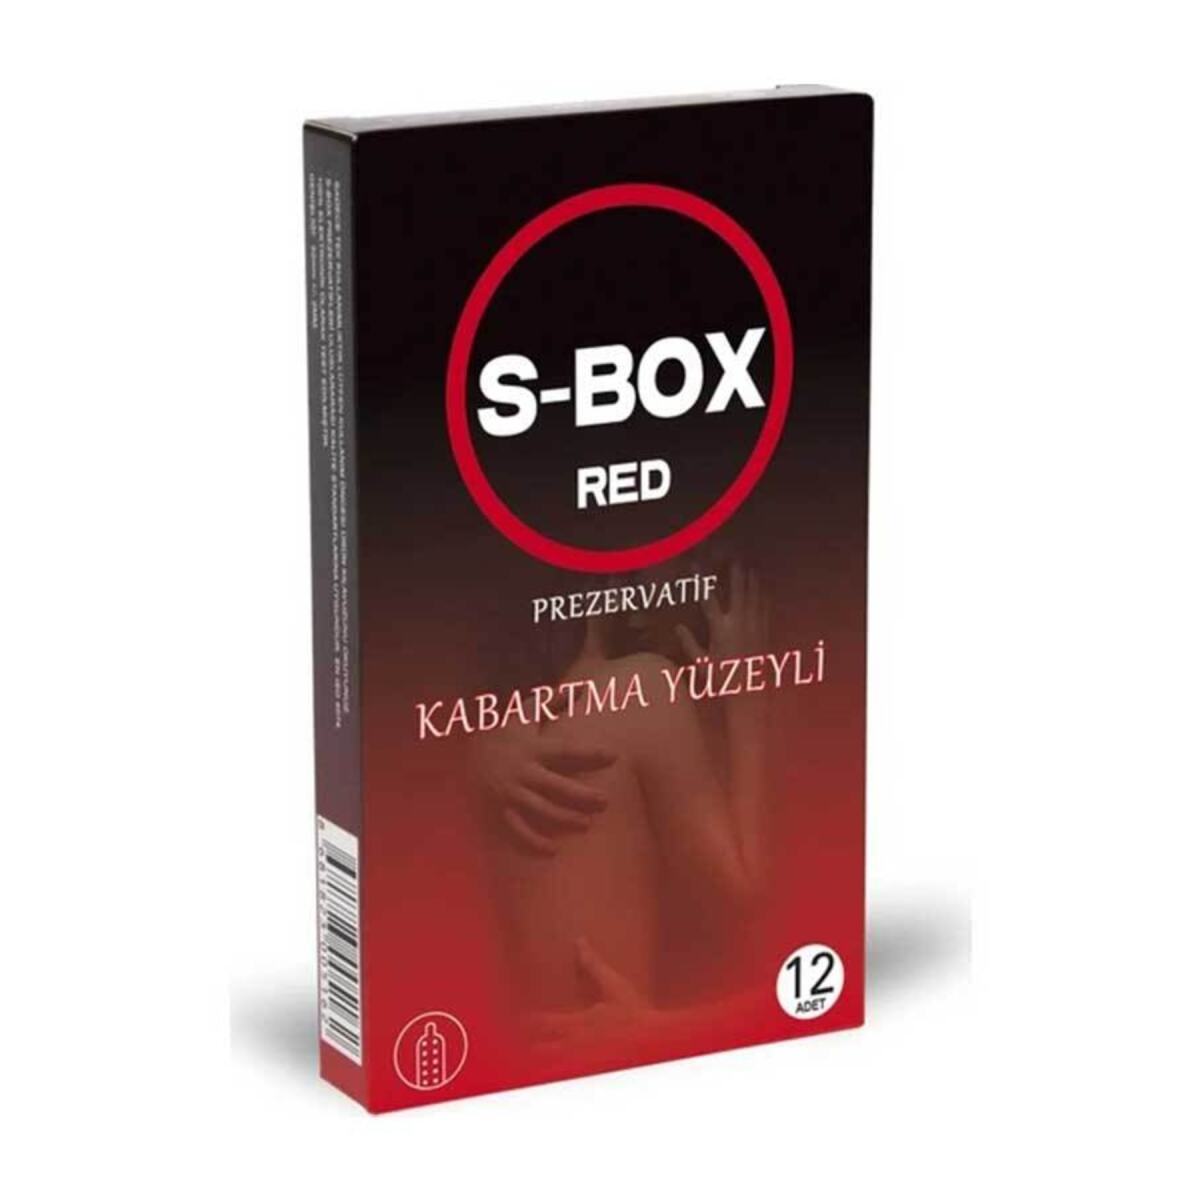 S-Box Kabartma Yüzeyli Prezervatif 12'Li